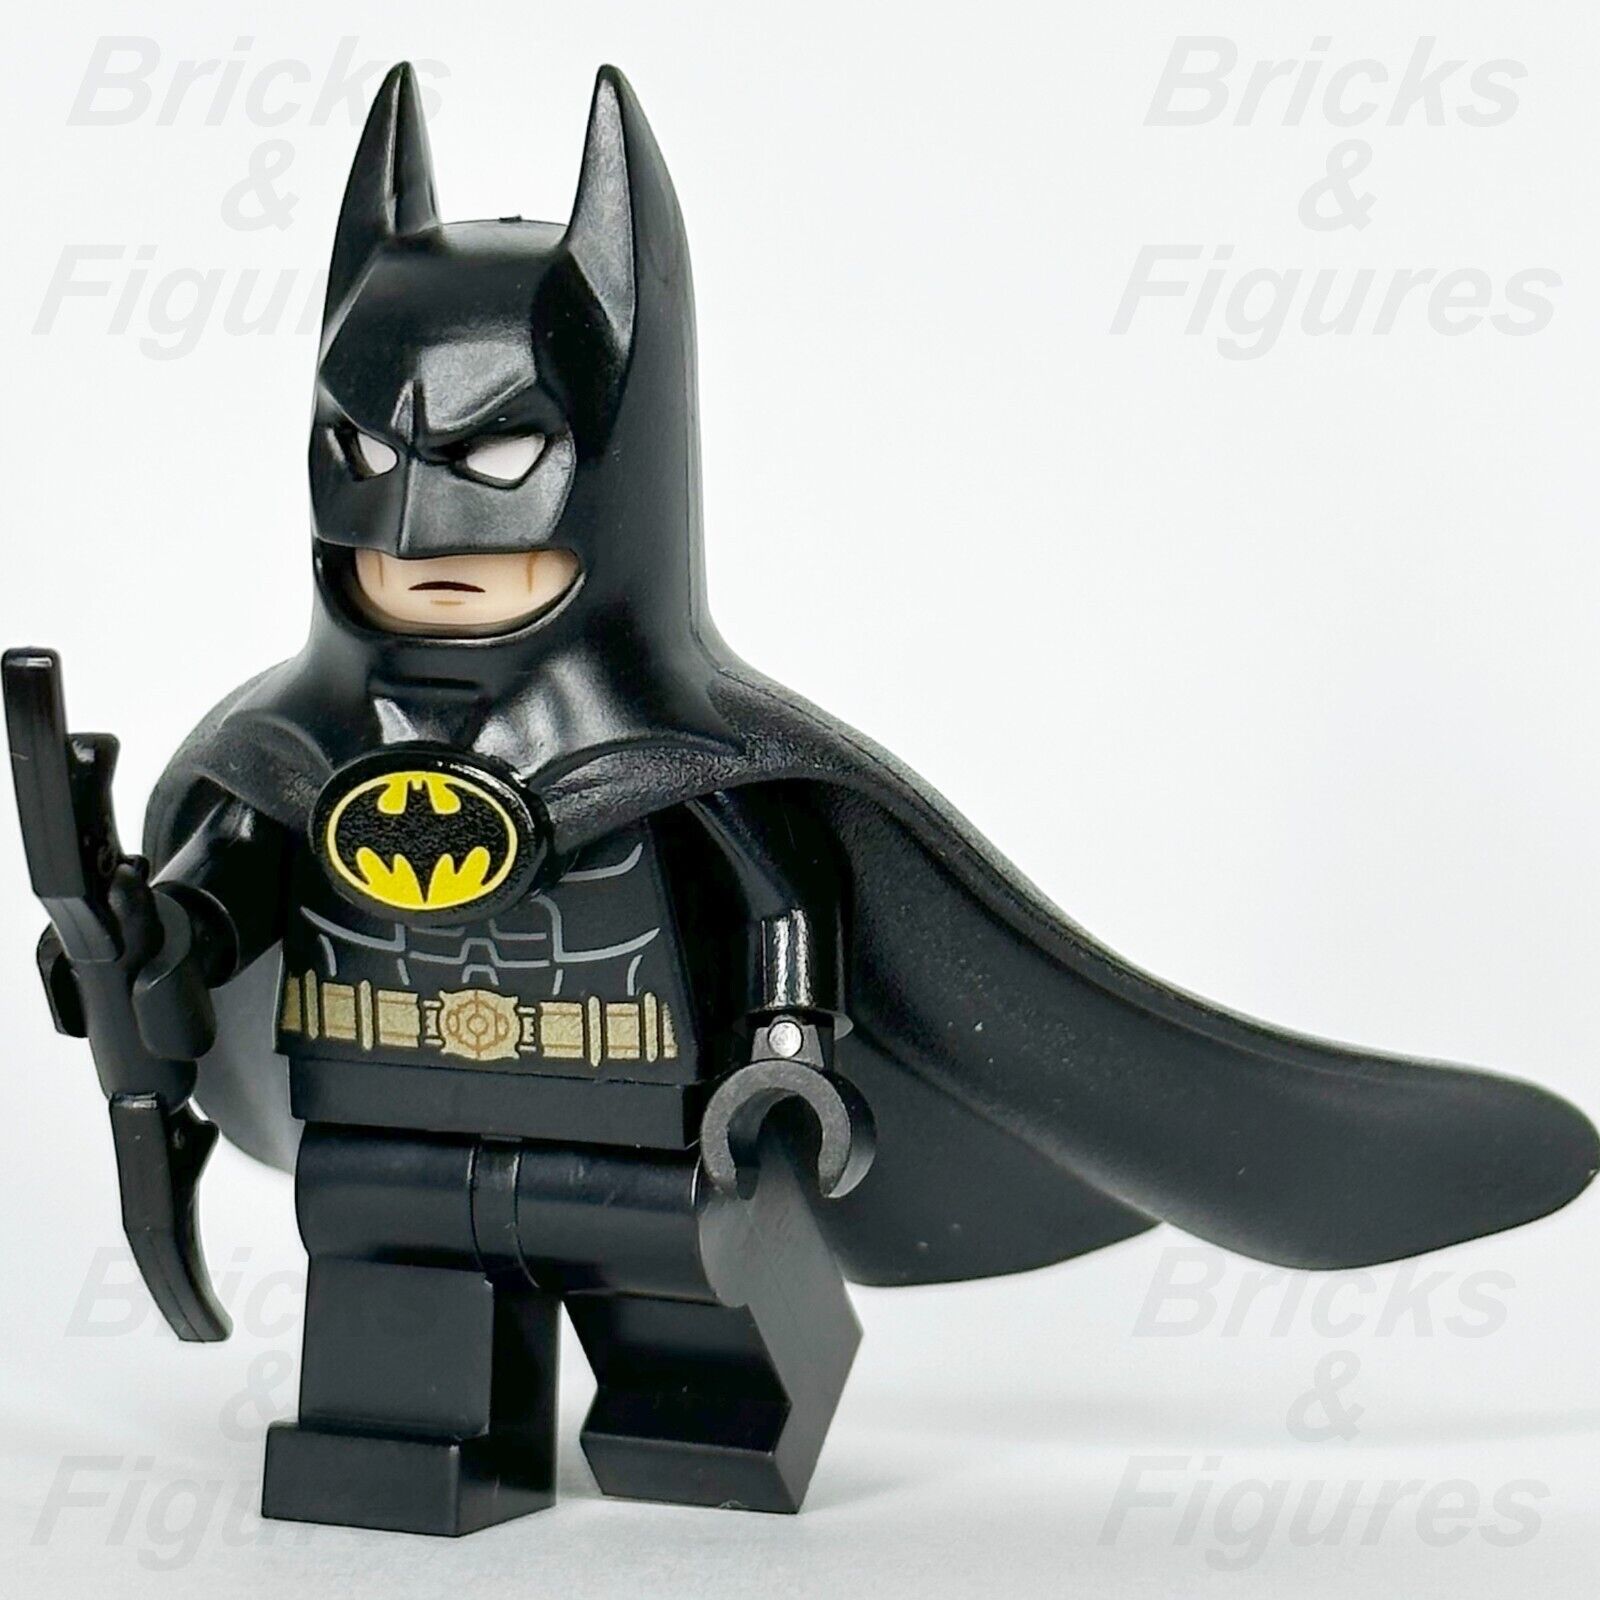 HOW TO UPGRADE the LEGO BATMAN 1989 Minifigures! 